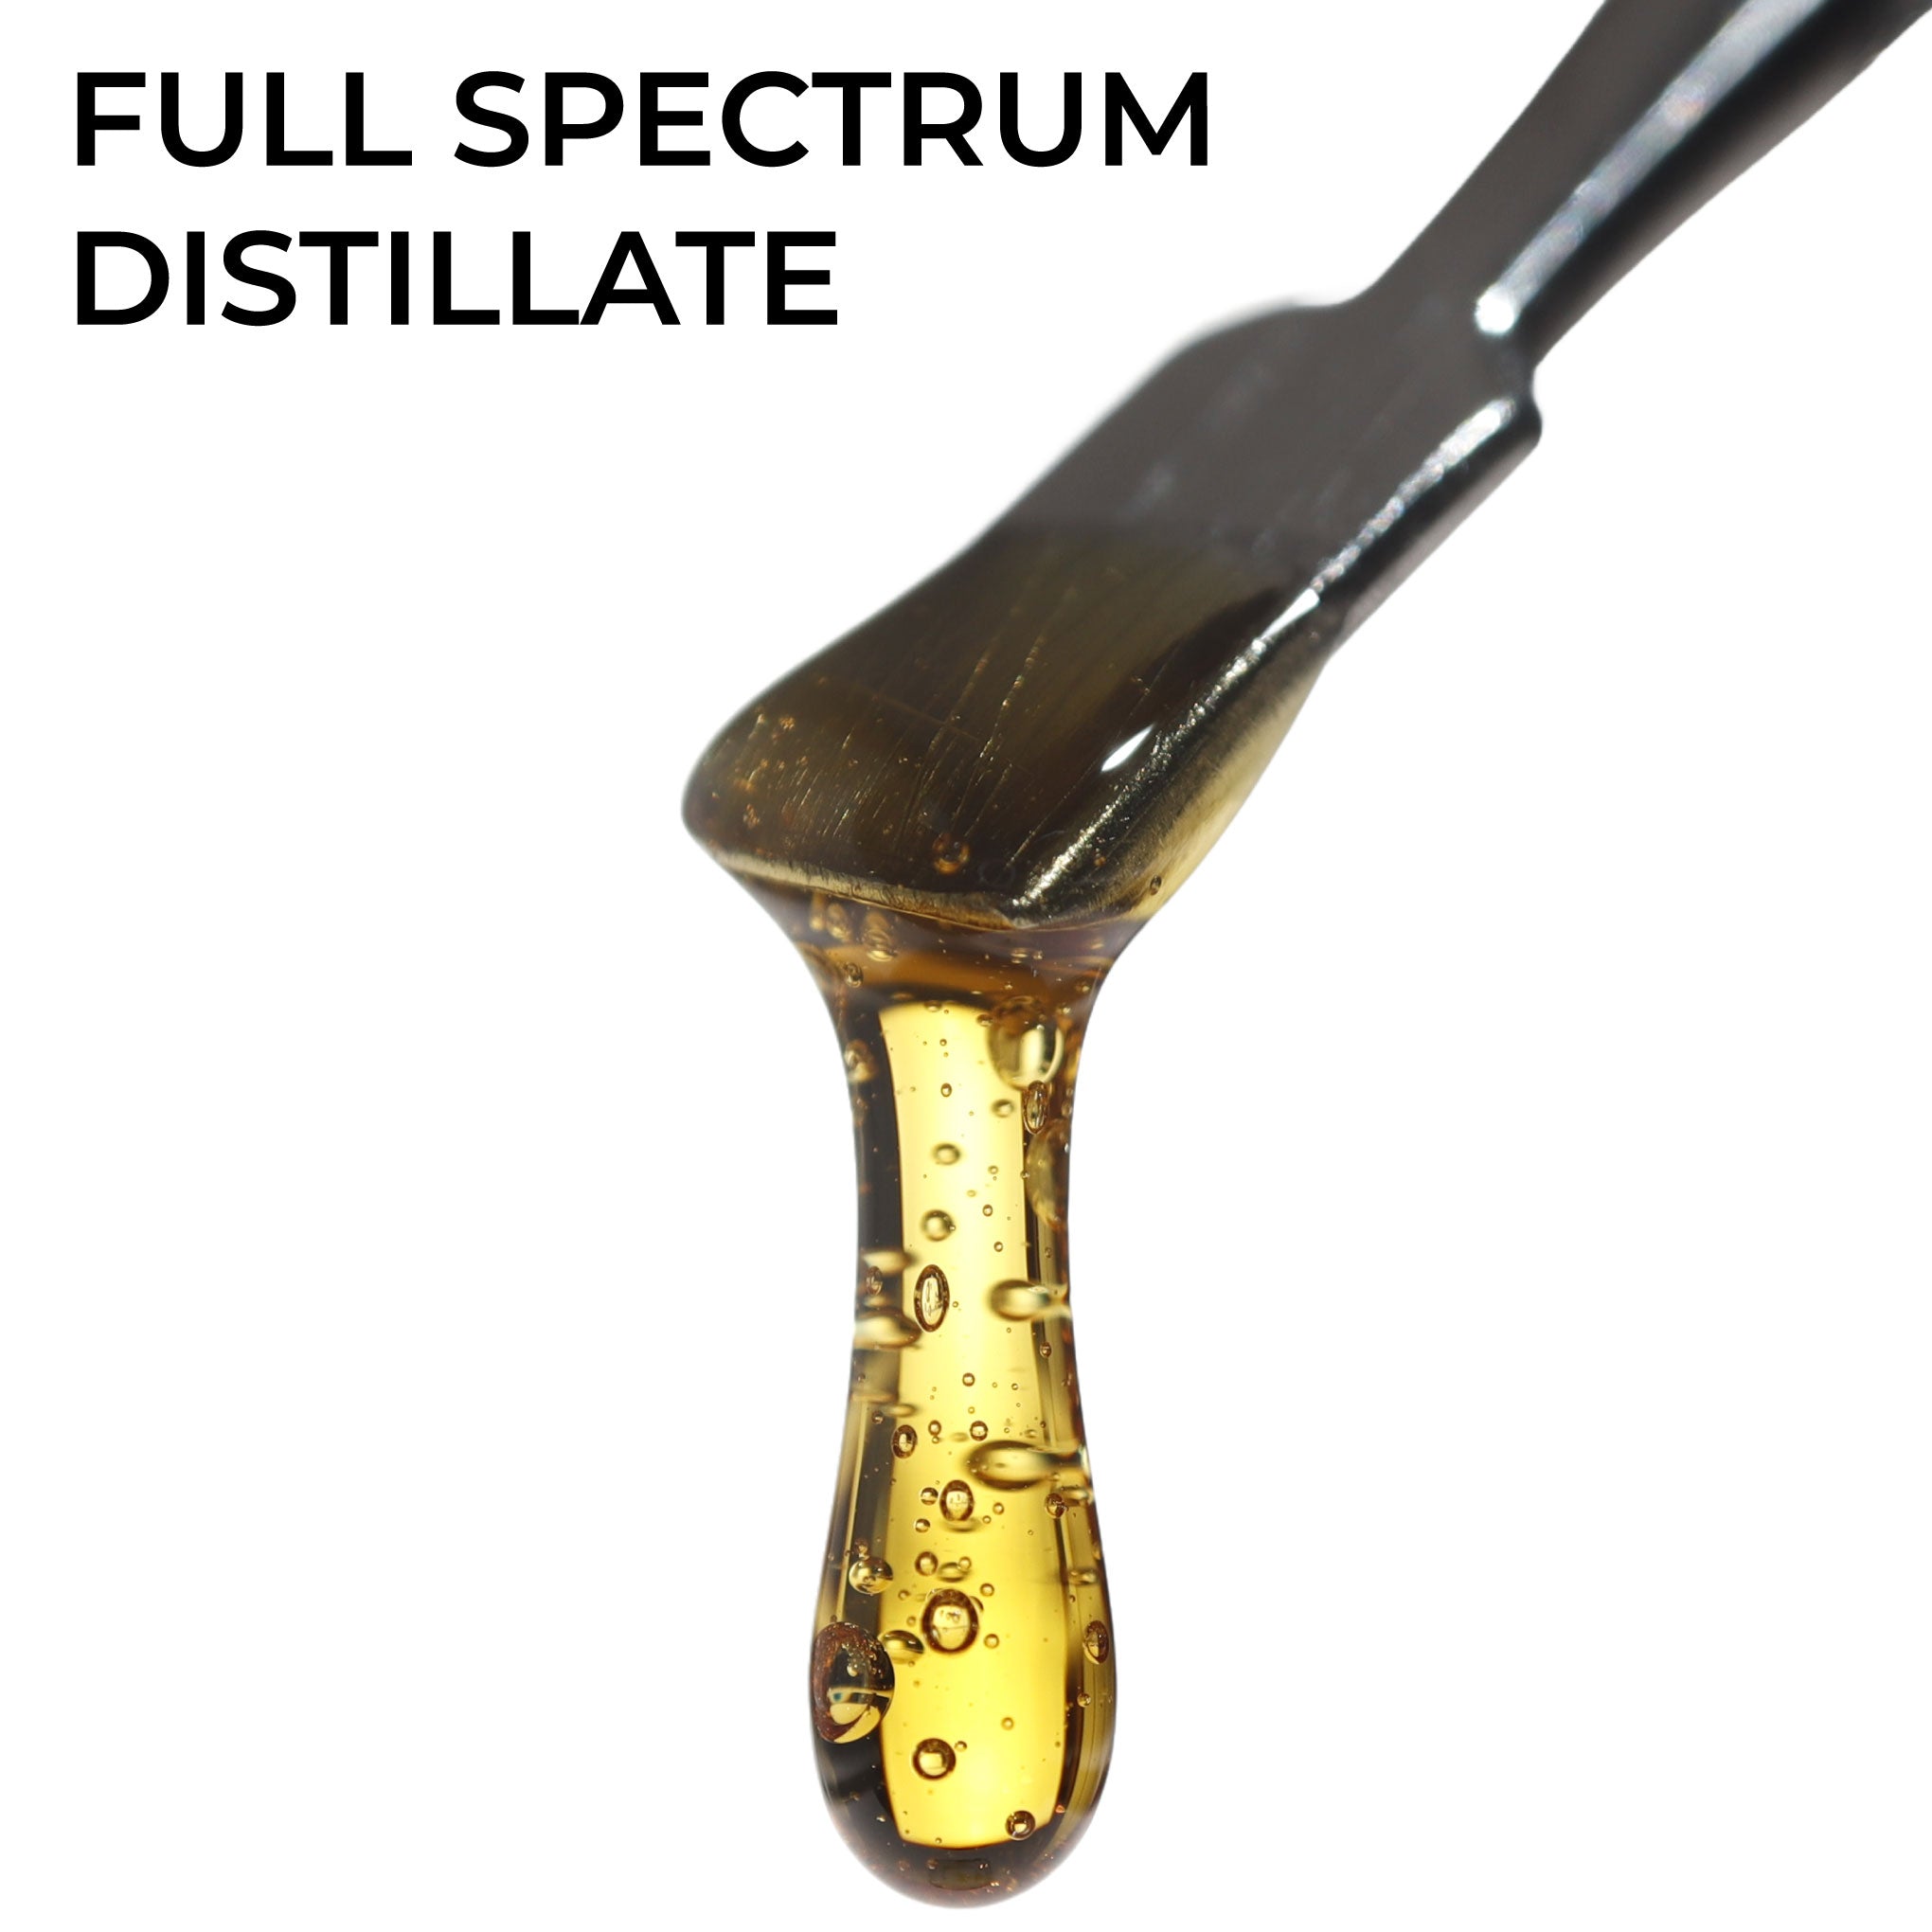 Image of Full Spectrum CBD Distillate dripping from dab tool.